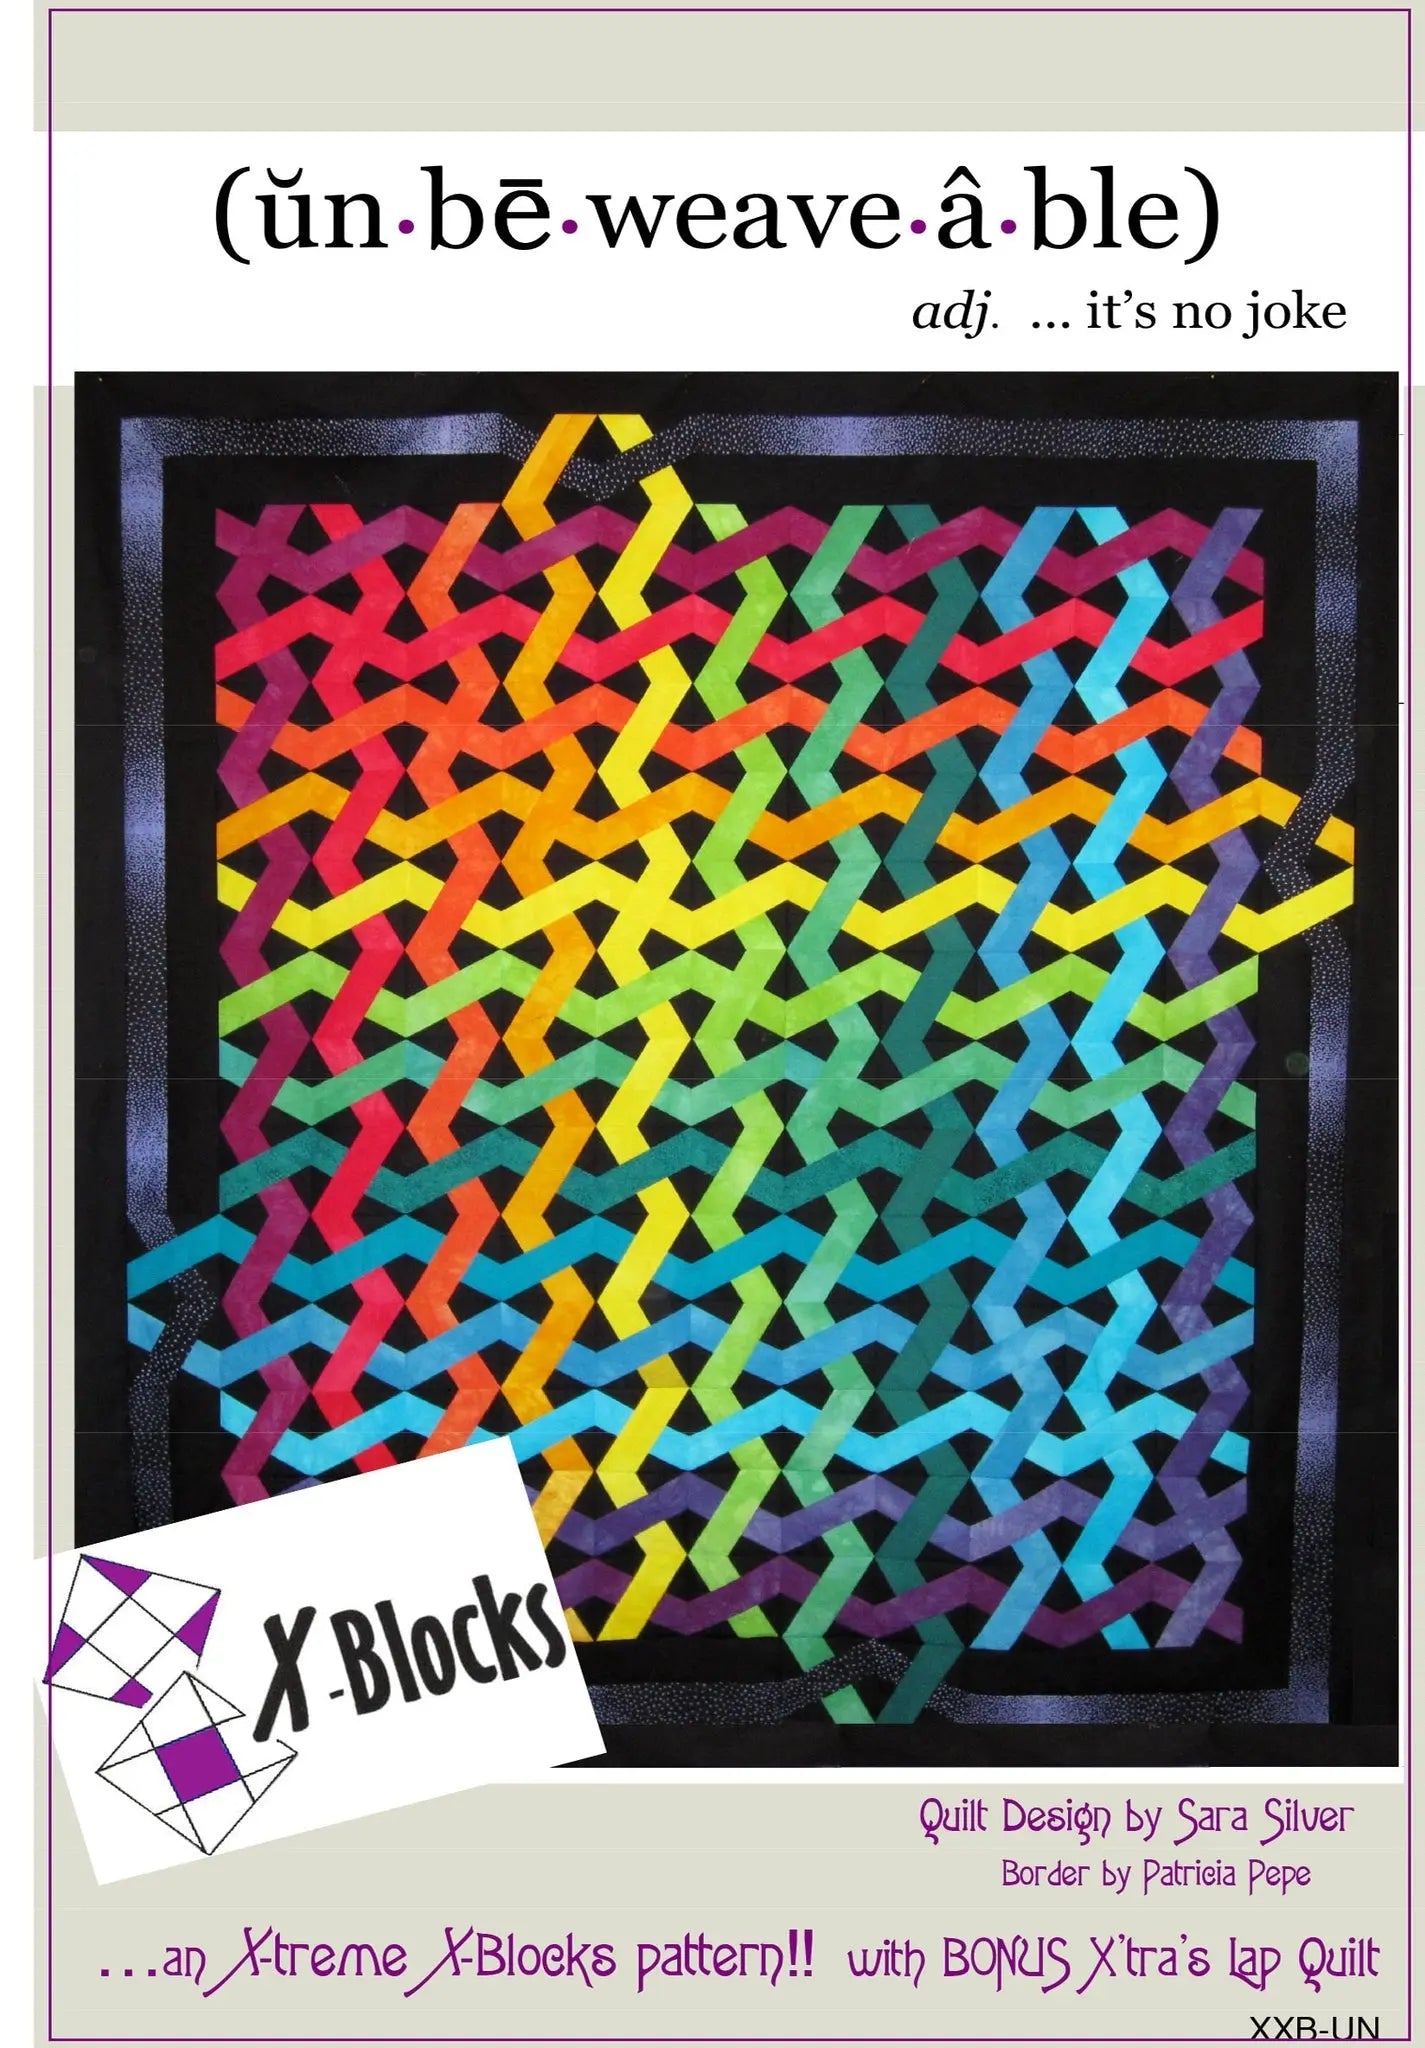 X-Block Extreme Unbeweaveable Pattern